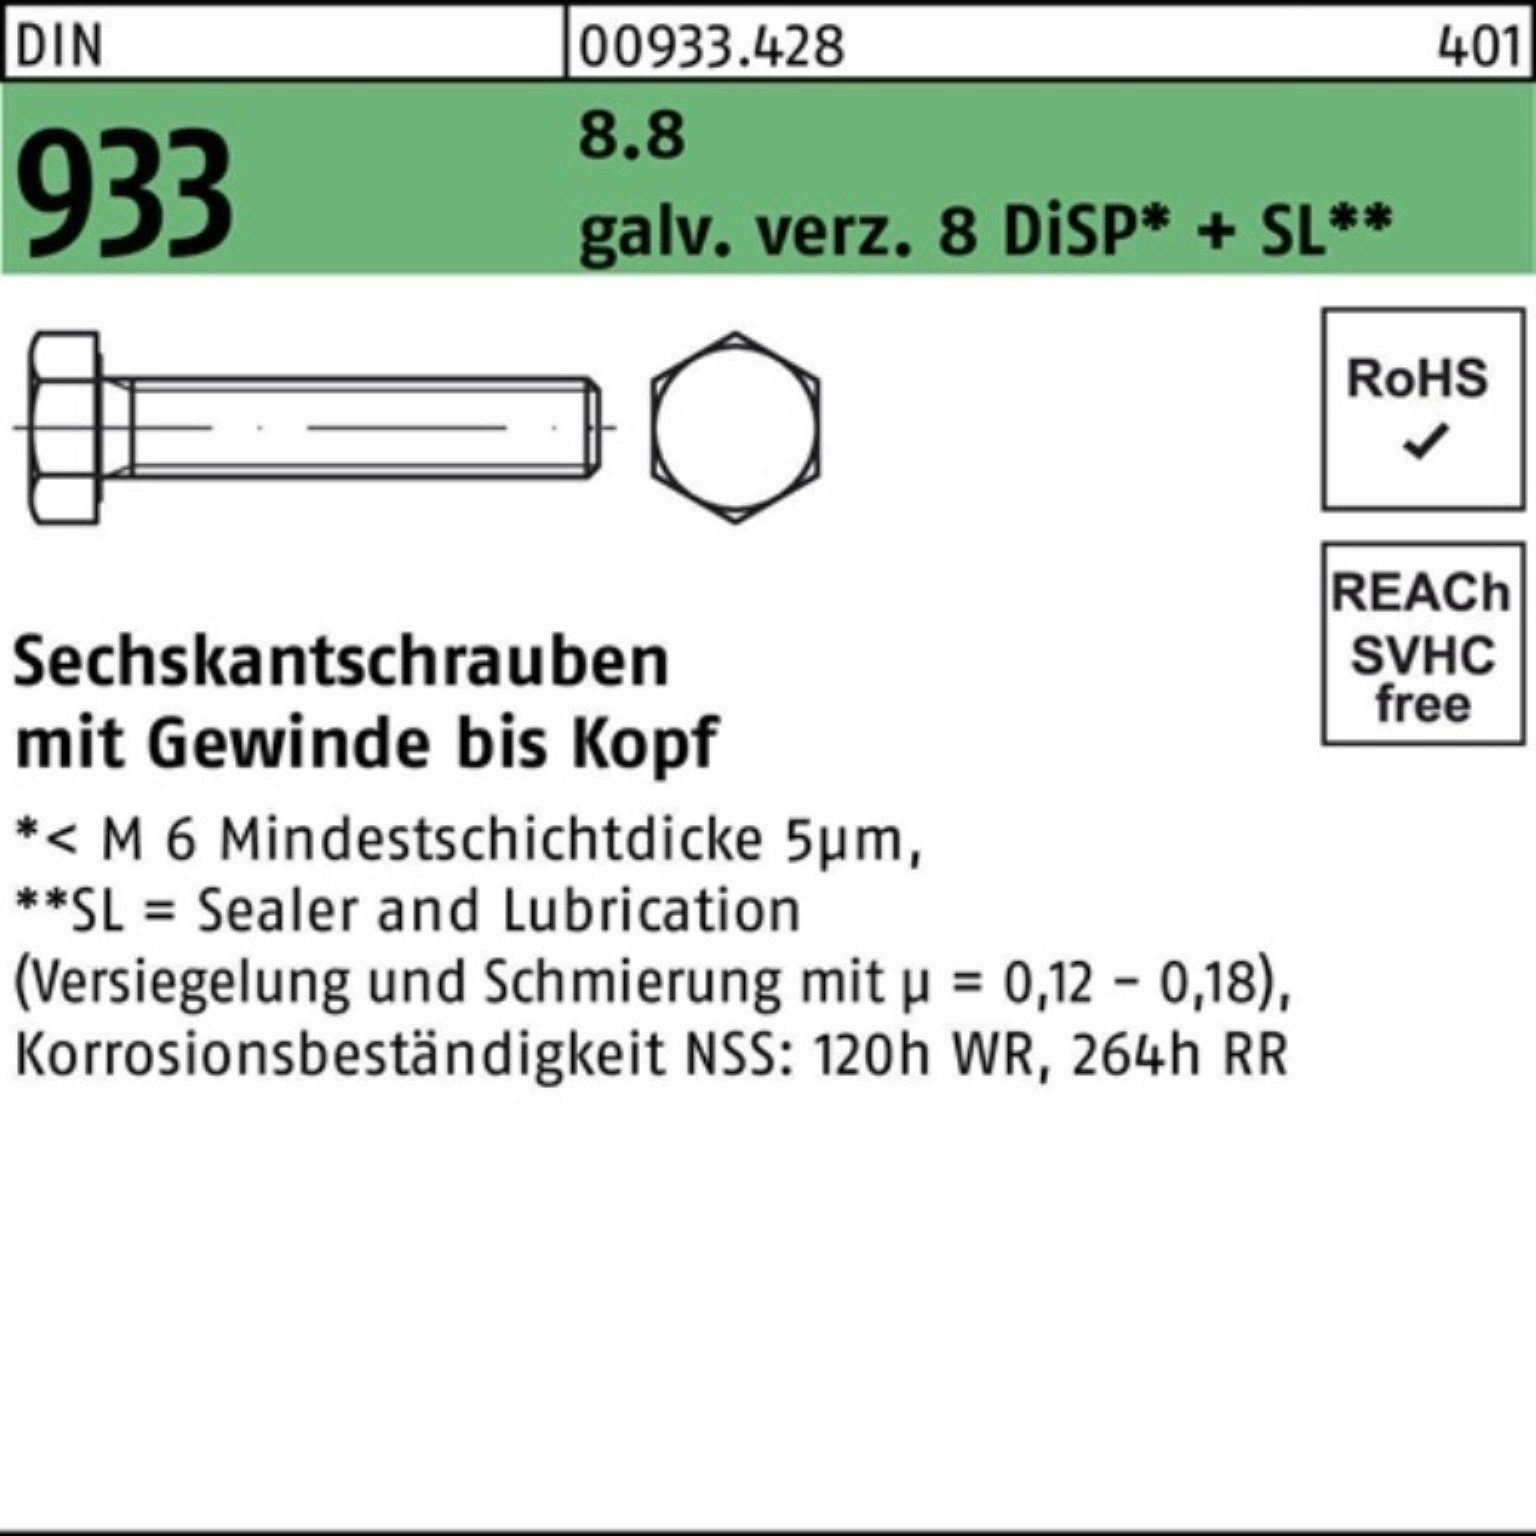 Reyher Sechskantschraube 100er Pack Sechskantschraube DIN 933 VG M16x 35 8.8 gal Zn 8 DiSP + SL